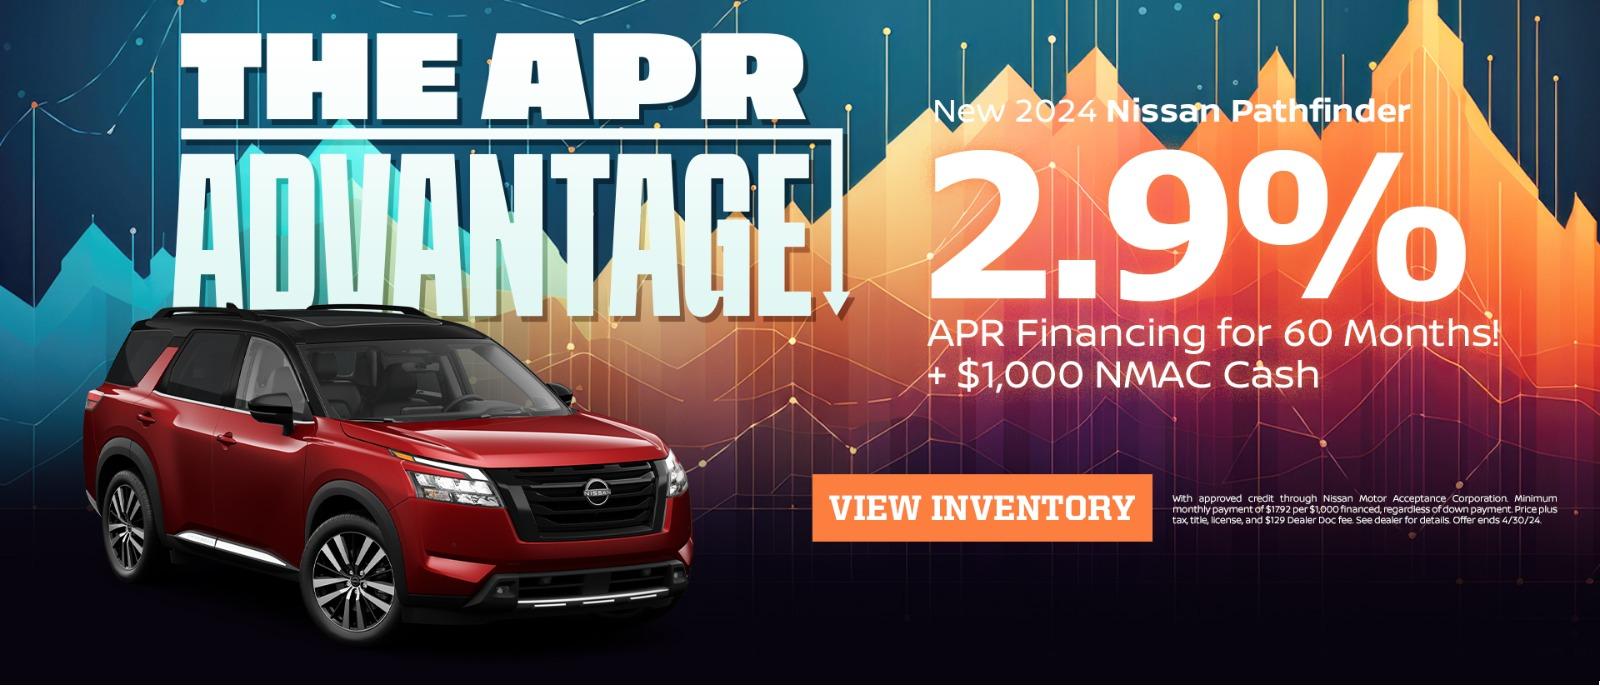 New 2024 Nissan Pathfinder 
2.9% APR Financing for 60 Months + $1,000 NMAC Cash